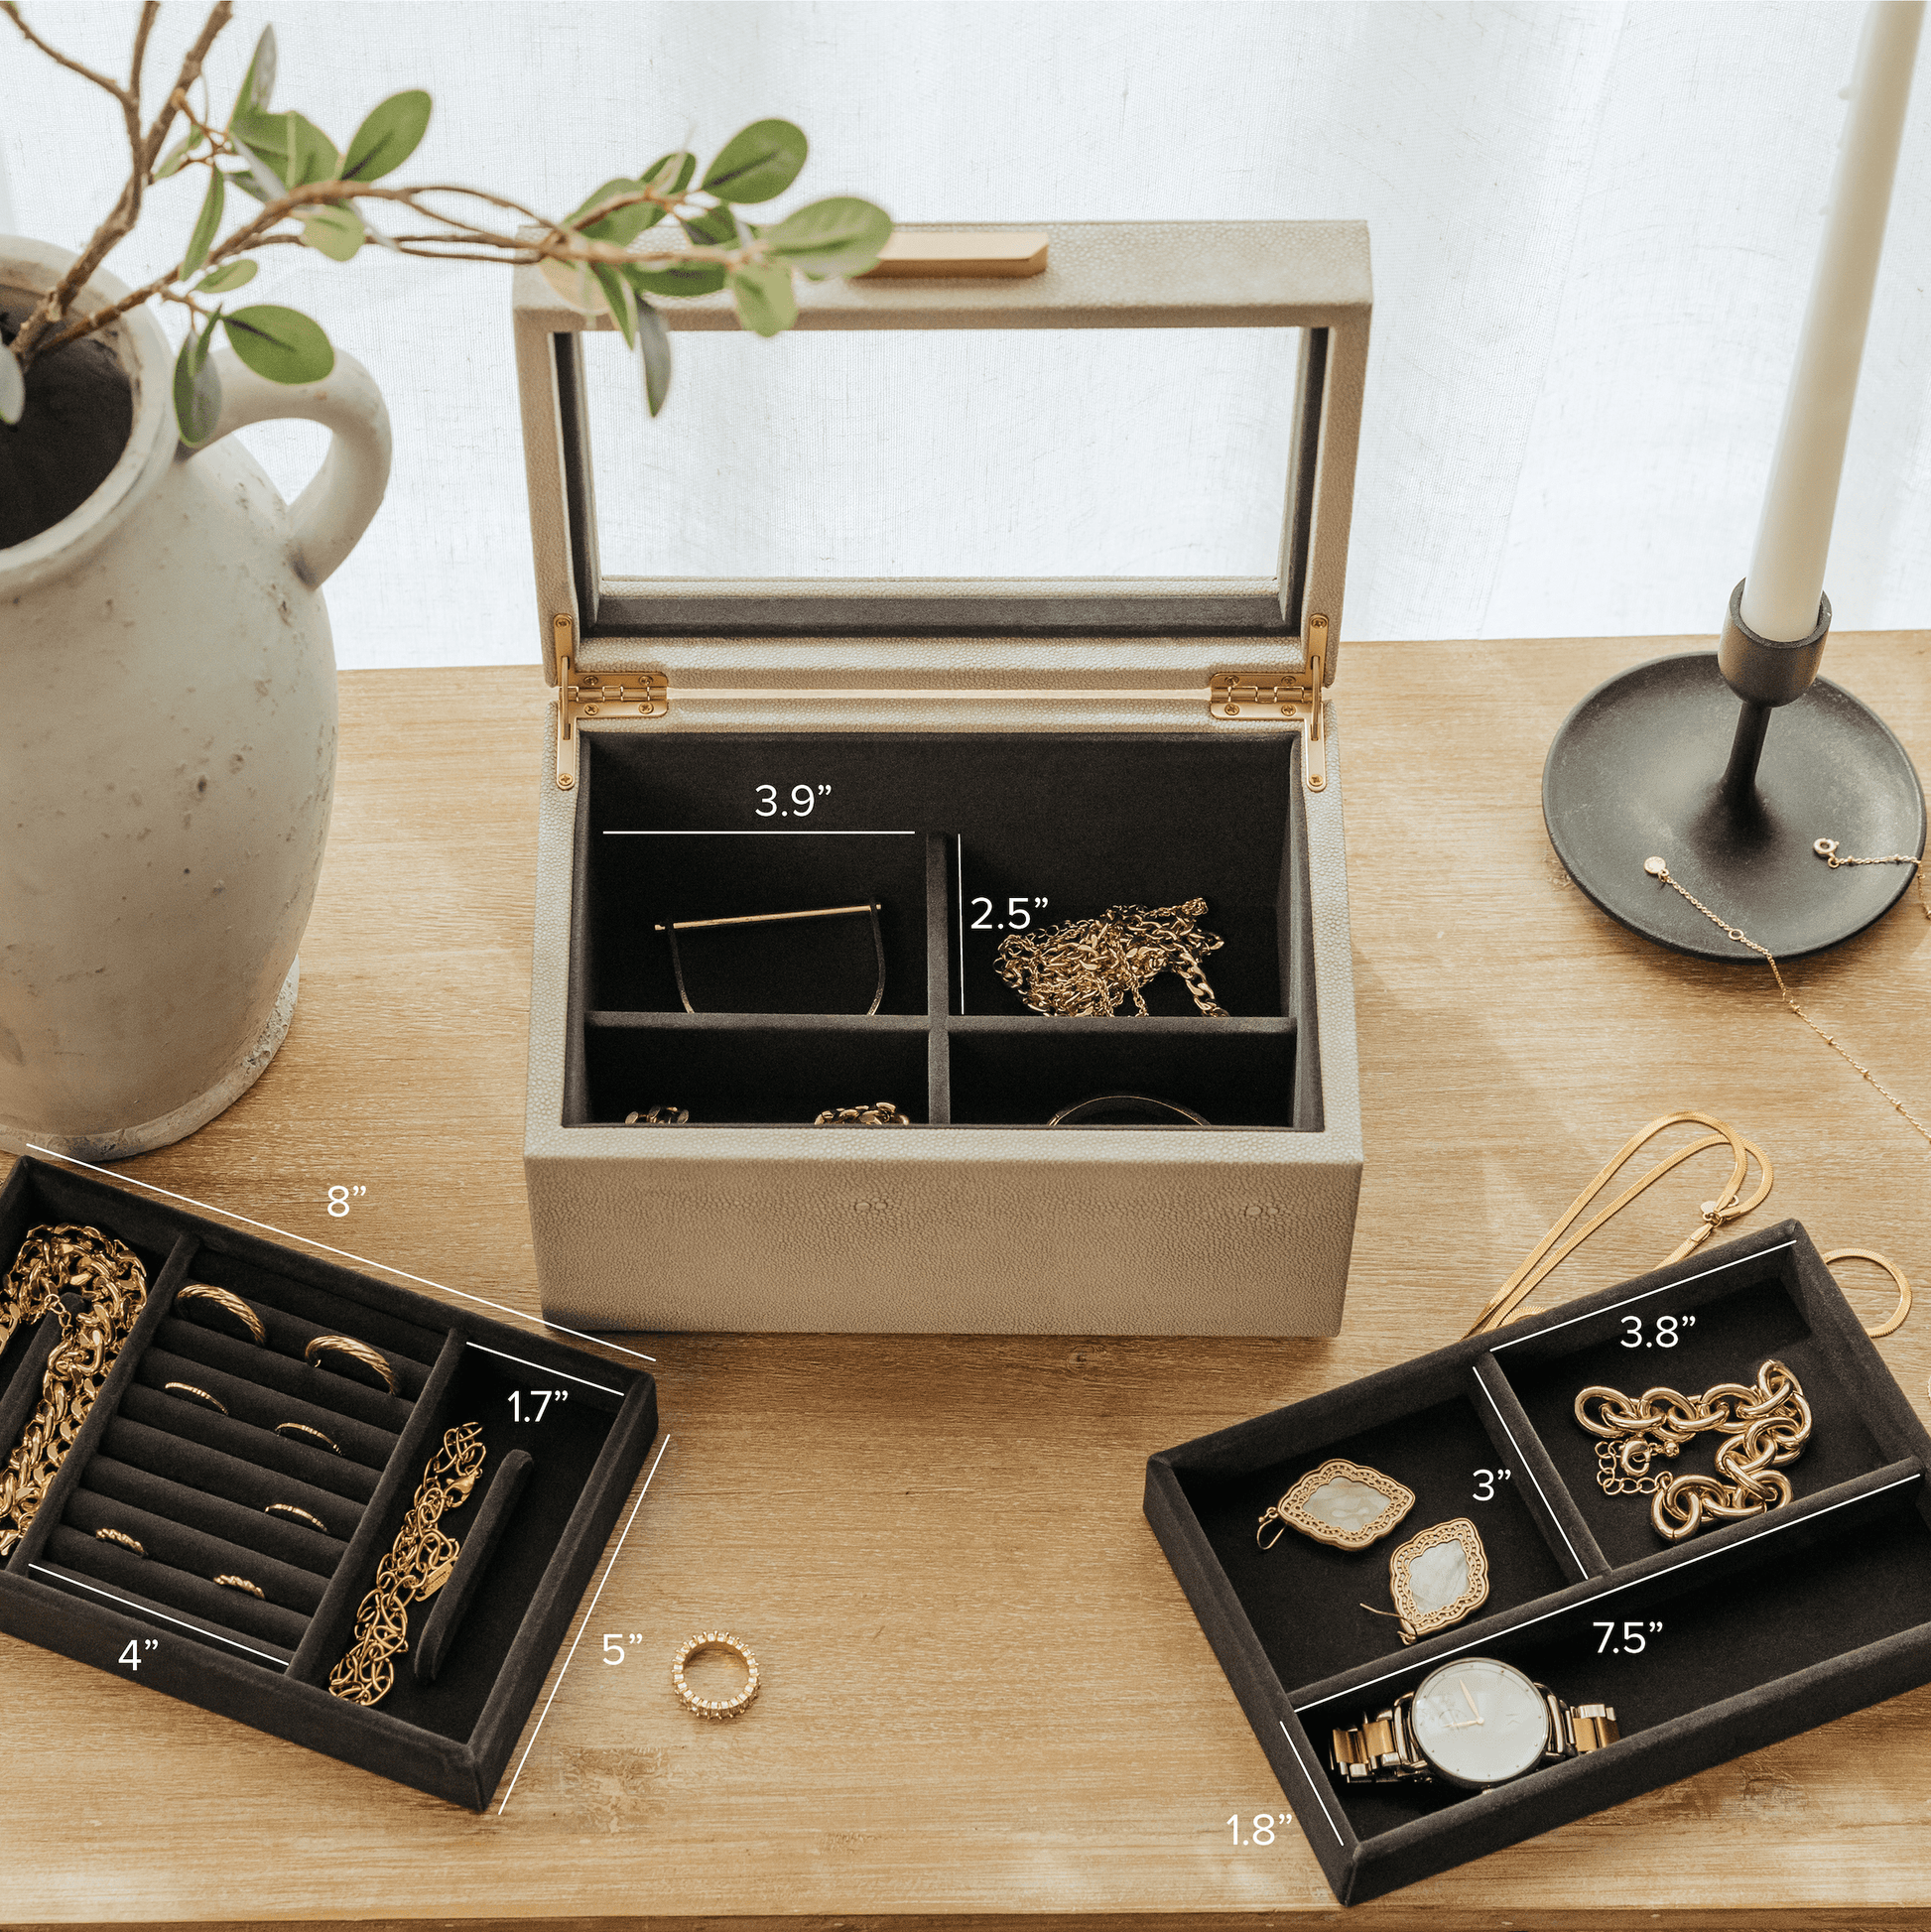 Case Elegance Sasha Small Jewelry Box